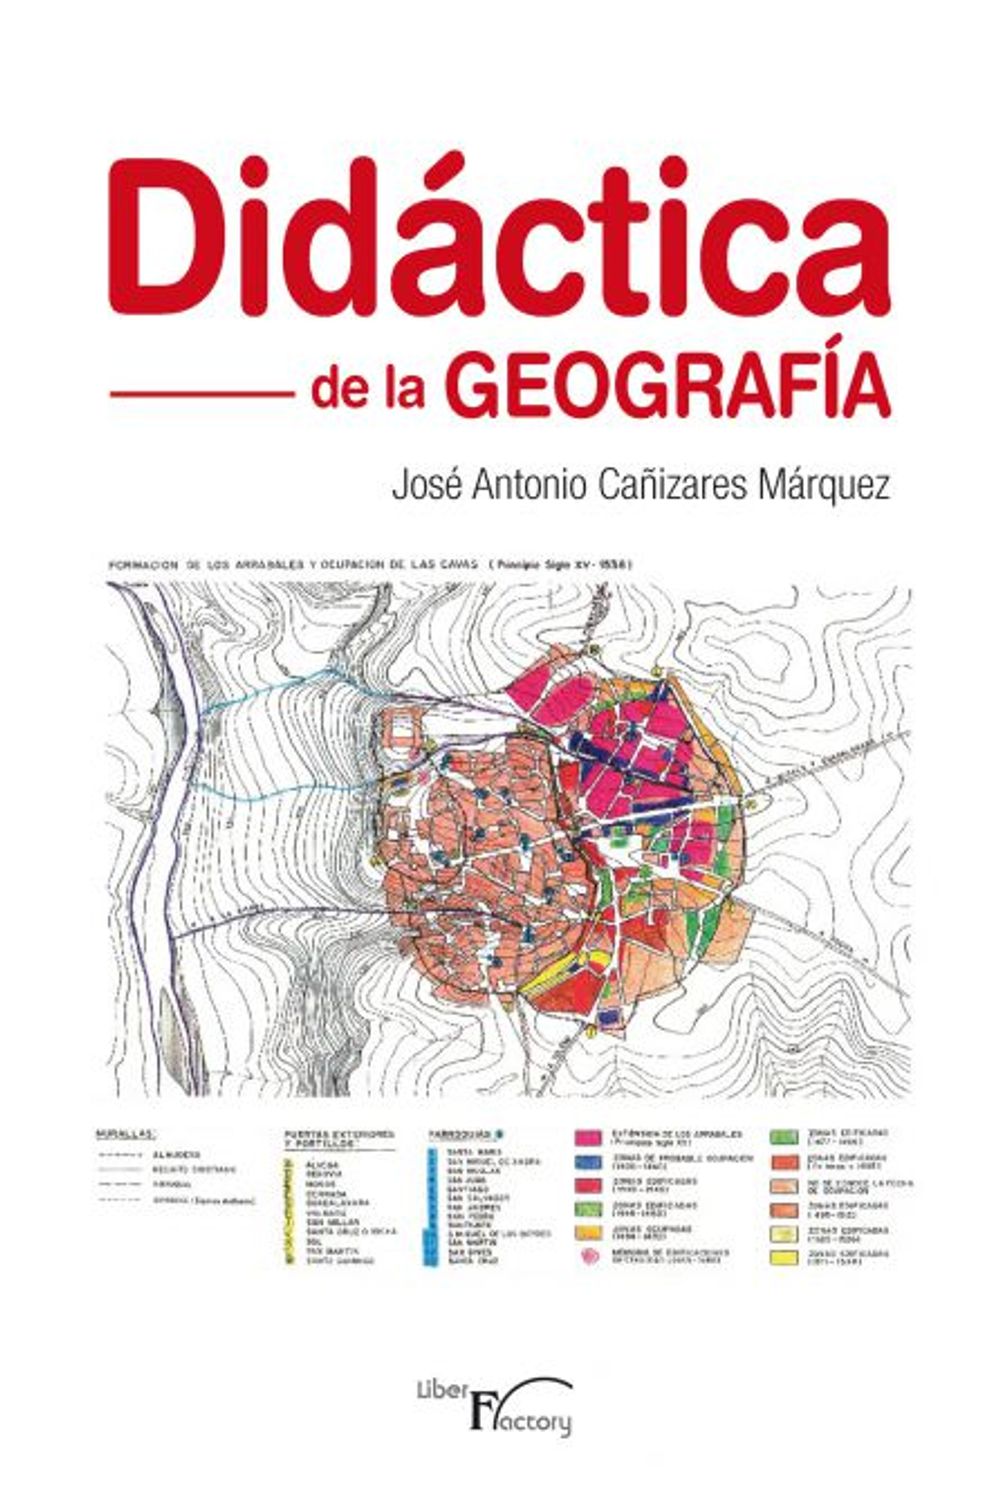 bm-didactica-de-la-geografia-grupo-editor-vision-net-9788499494425